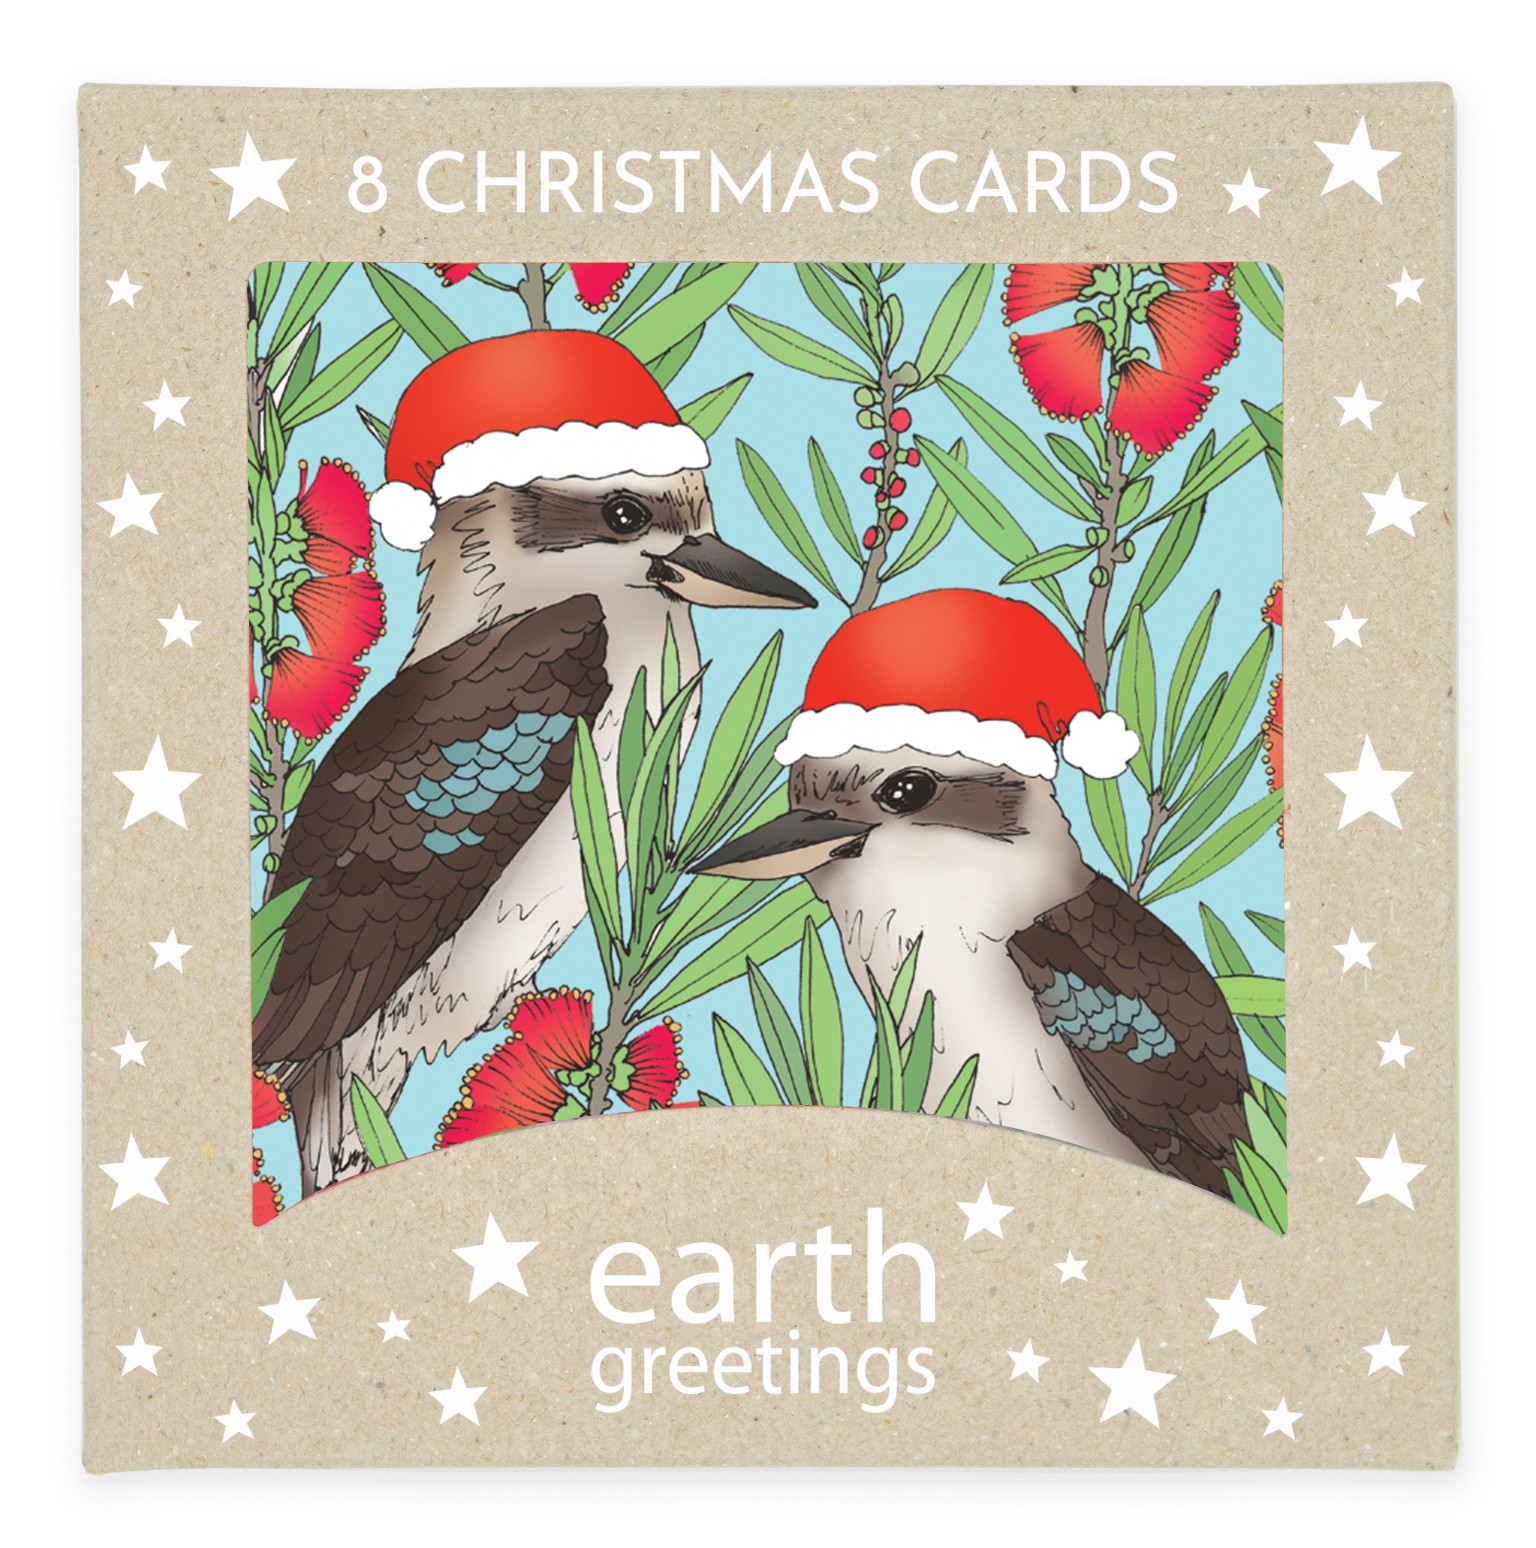 Boxed Christmas Cards (Square) - Jolly Kookaburras 